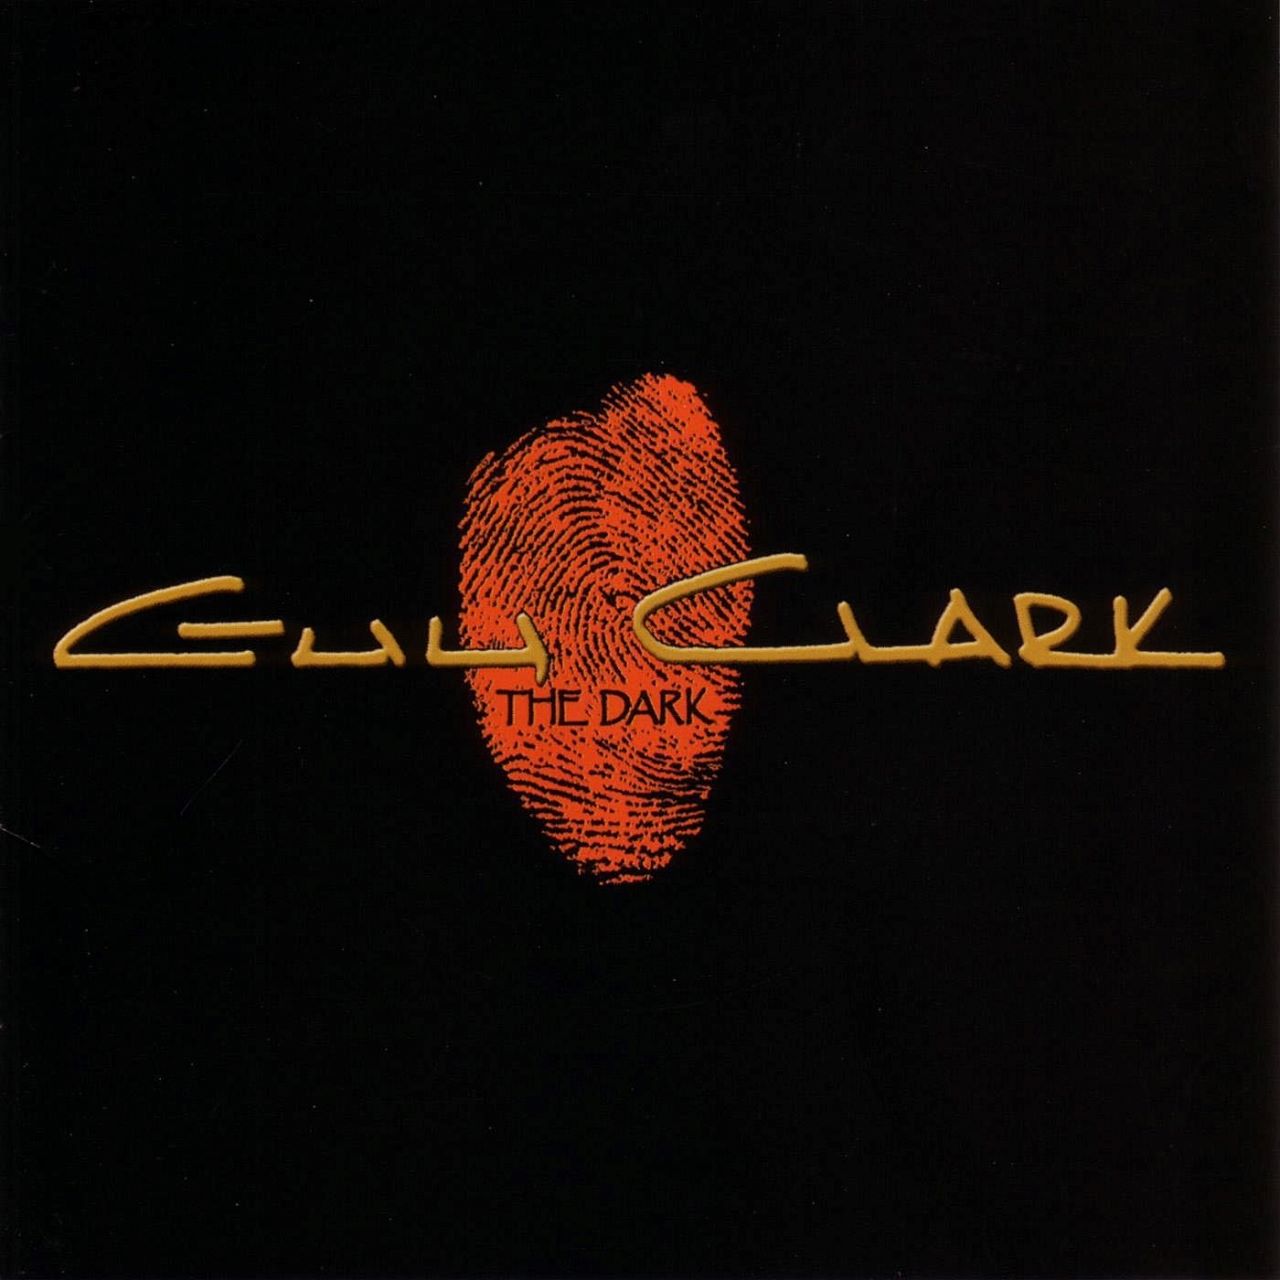 Guy Clark - The Dark cover album